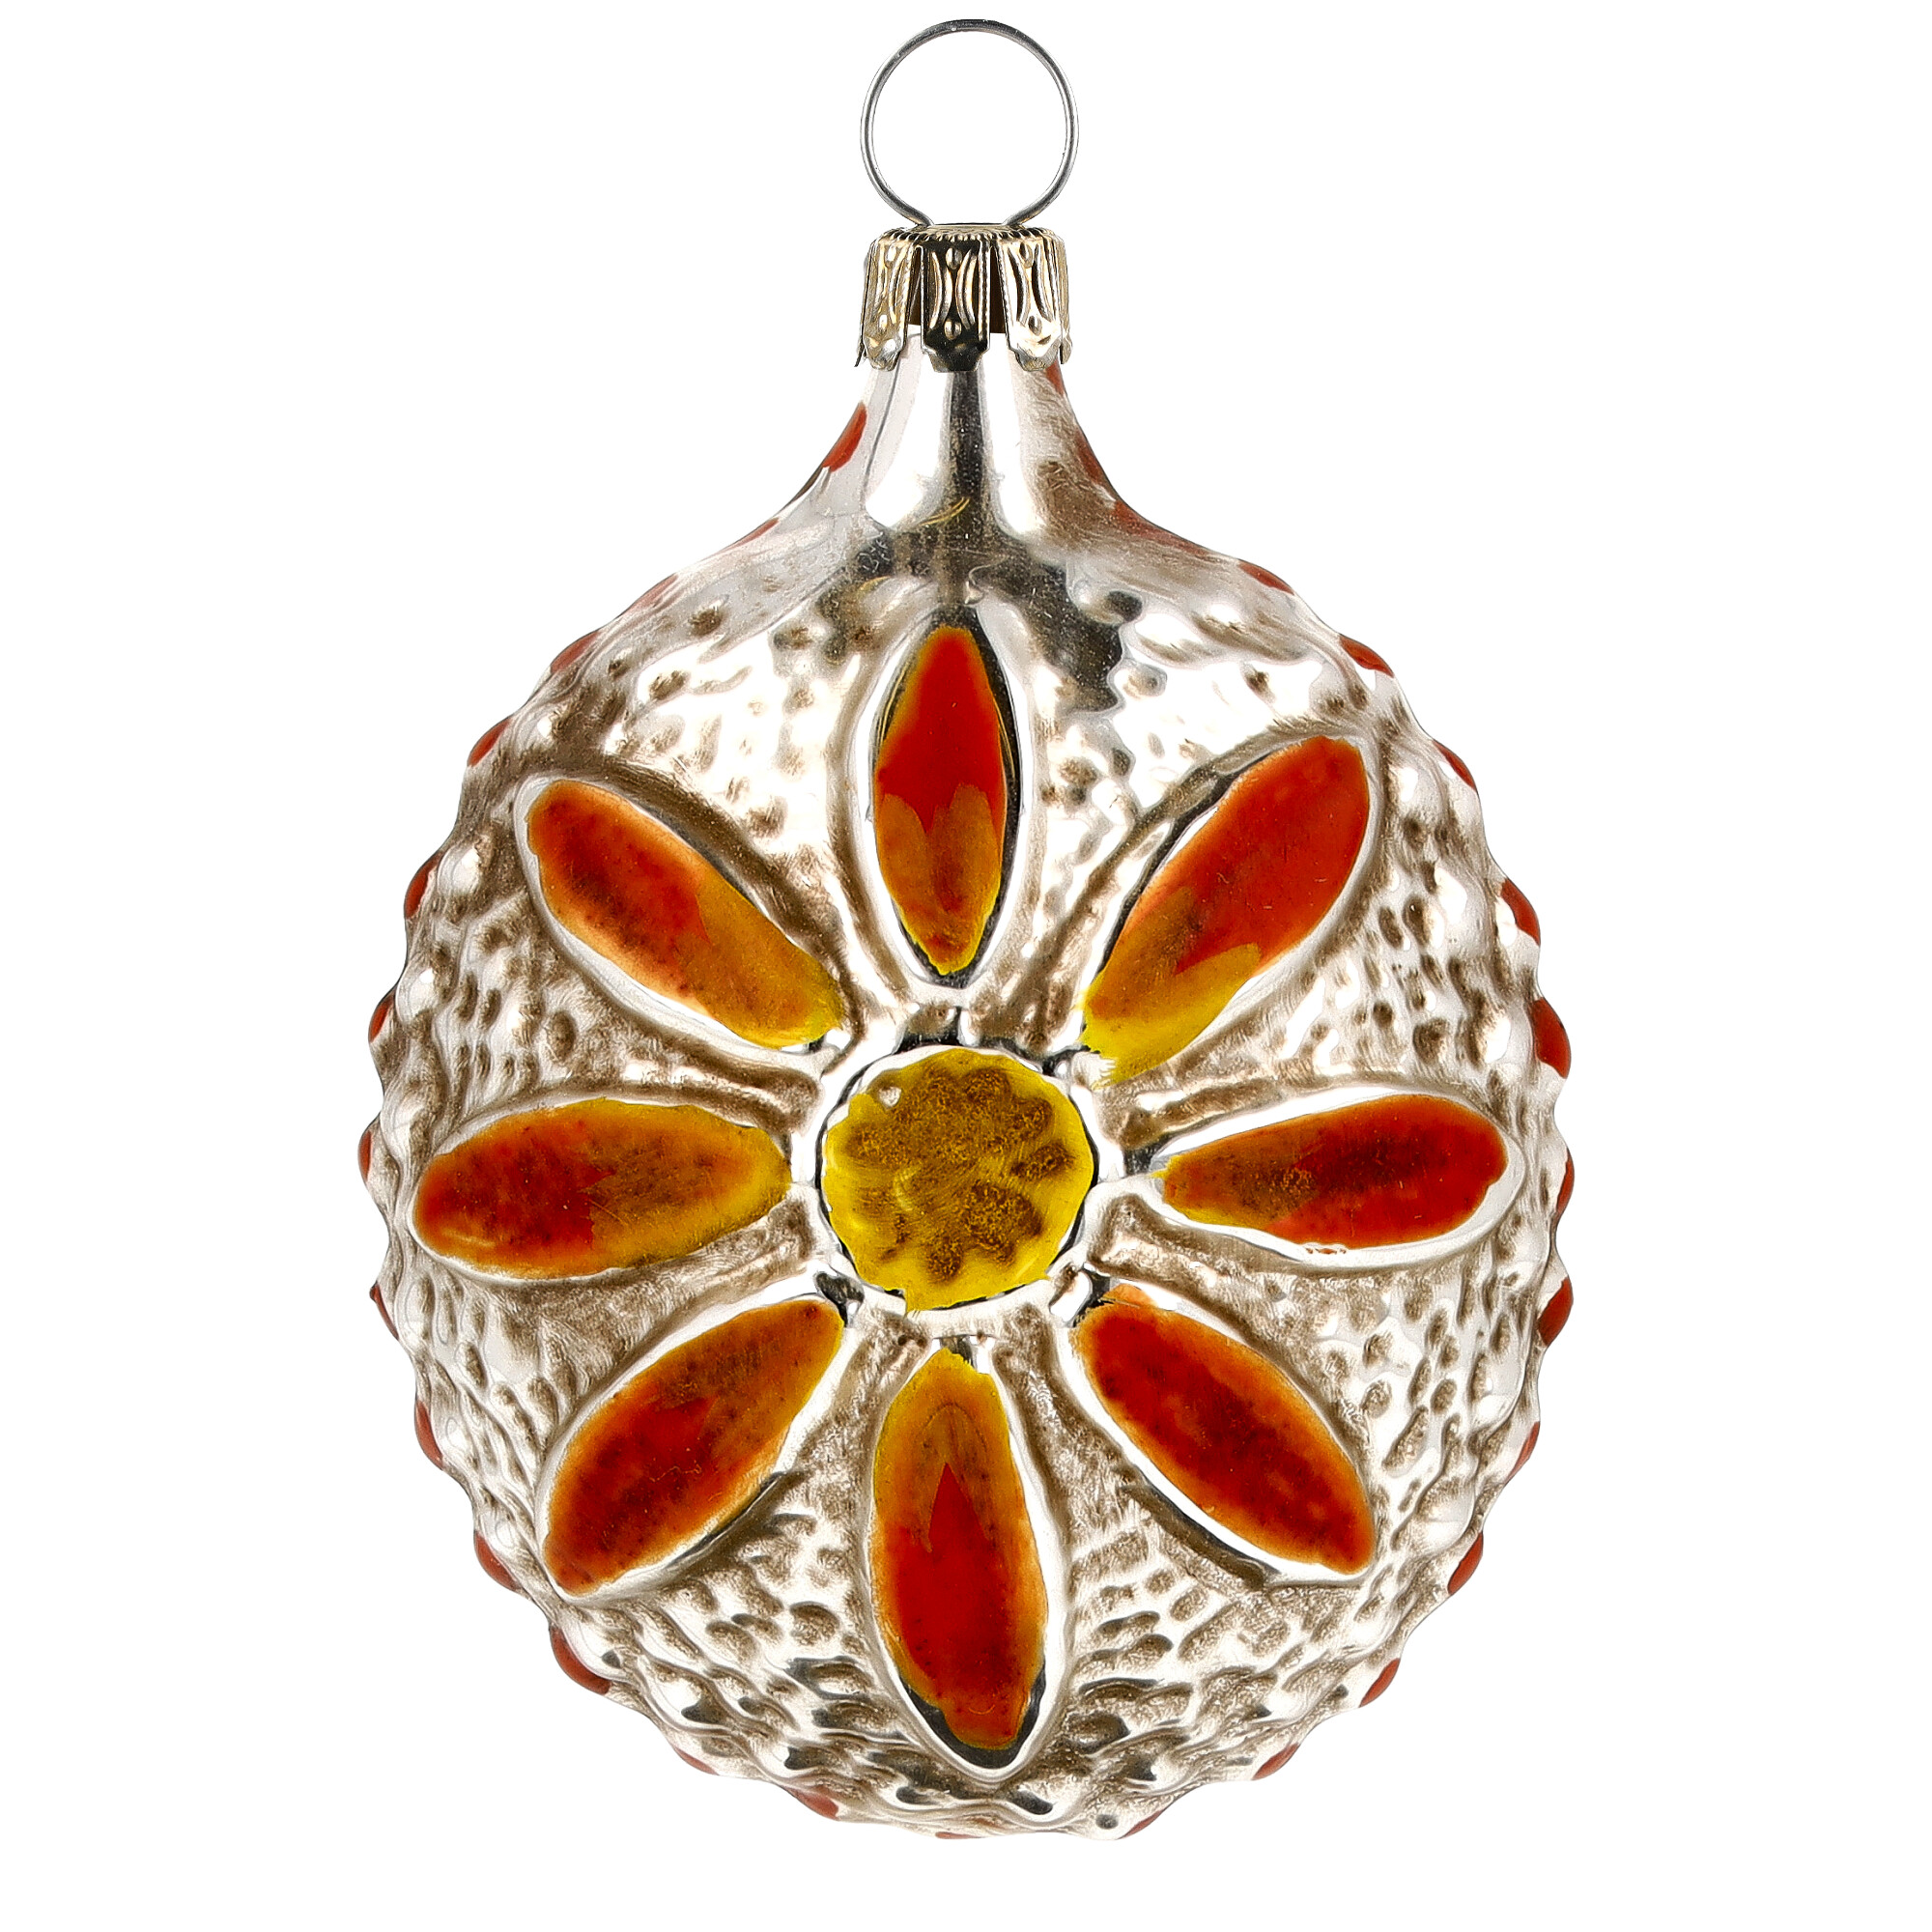 Retro Vintage style Christmas Glass Ornament - Gerbera